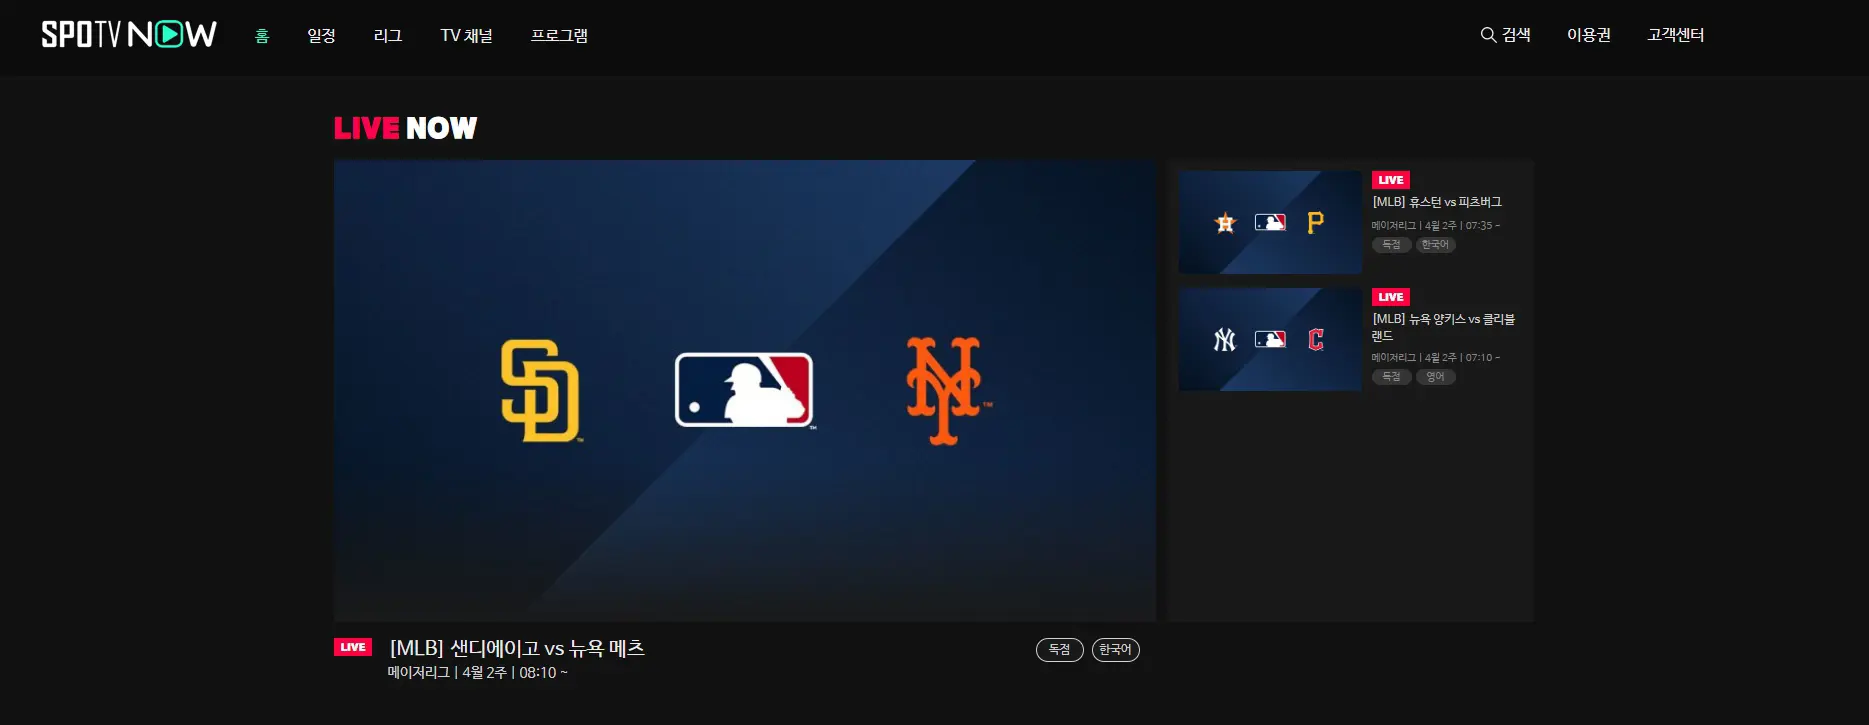 MLB 중계 및 메이저리그 실시간 중계 사이트 좌표 TOP 6